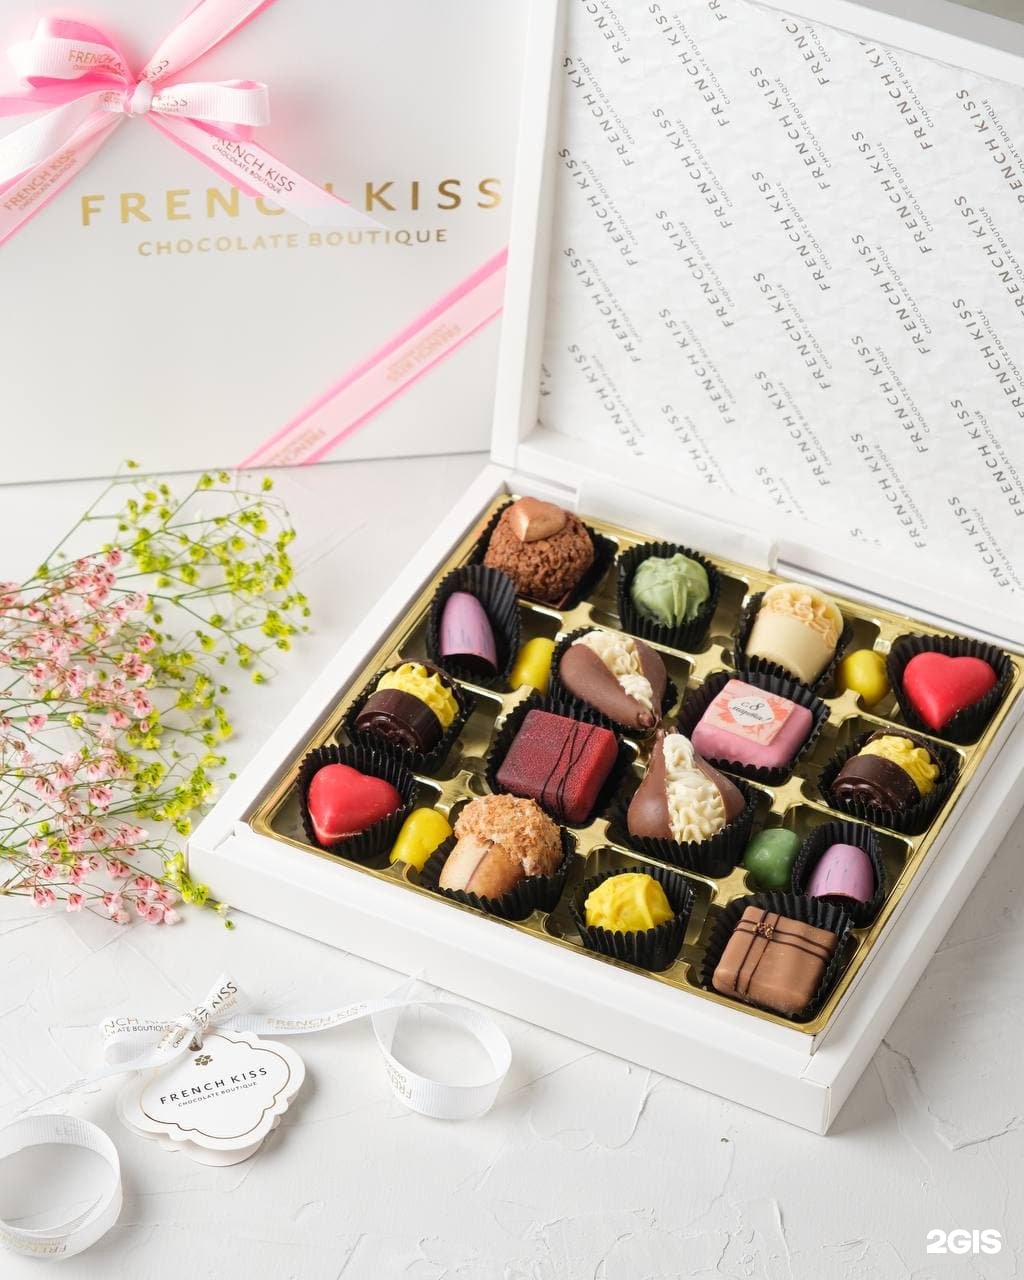 Магазины kiss. Френч Кисс шоколад. French Kiss шоколадный бутик. Французские конфеты. Шоколадные конфеты френч Кисс.